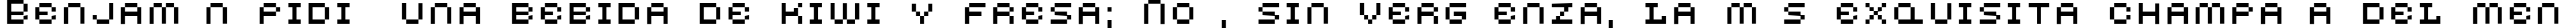 Пример написания шрифтом AuX DotBitC Xtra SmallCaps текста на испанском